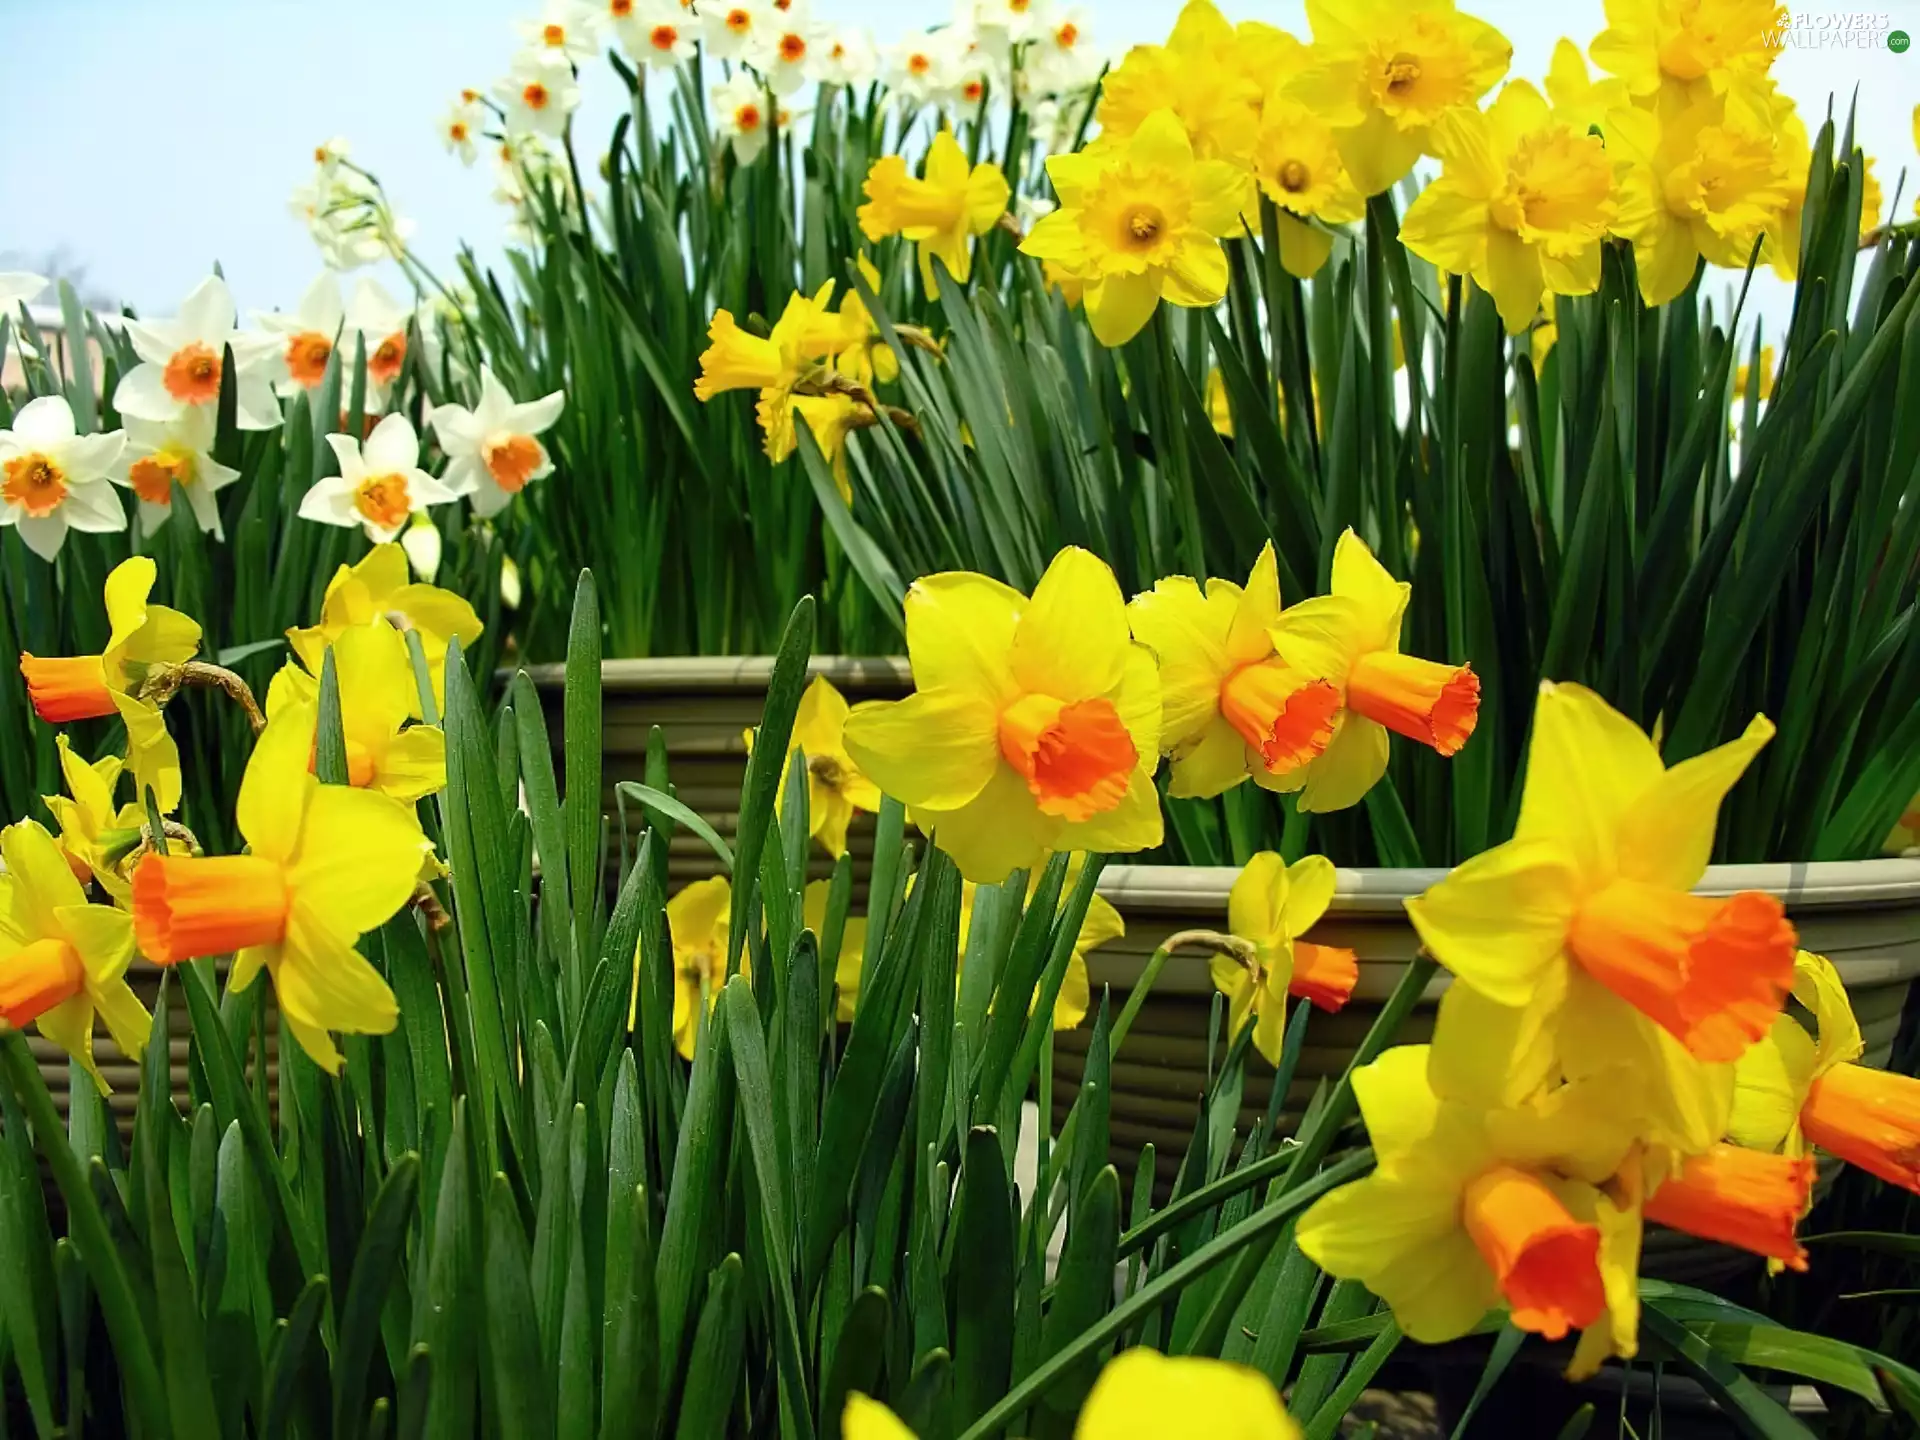 Daffodils, White, Yellow